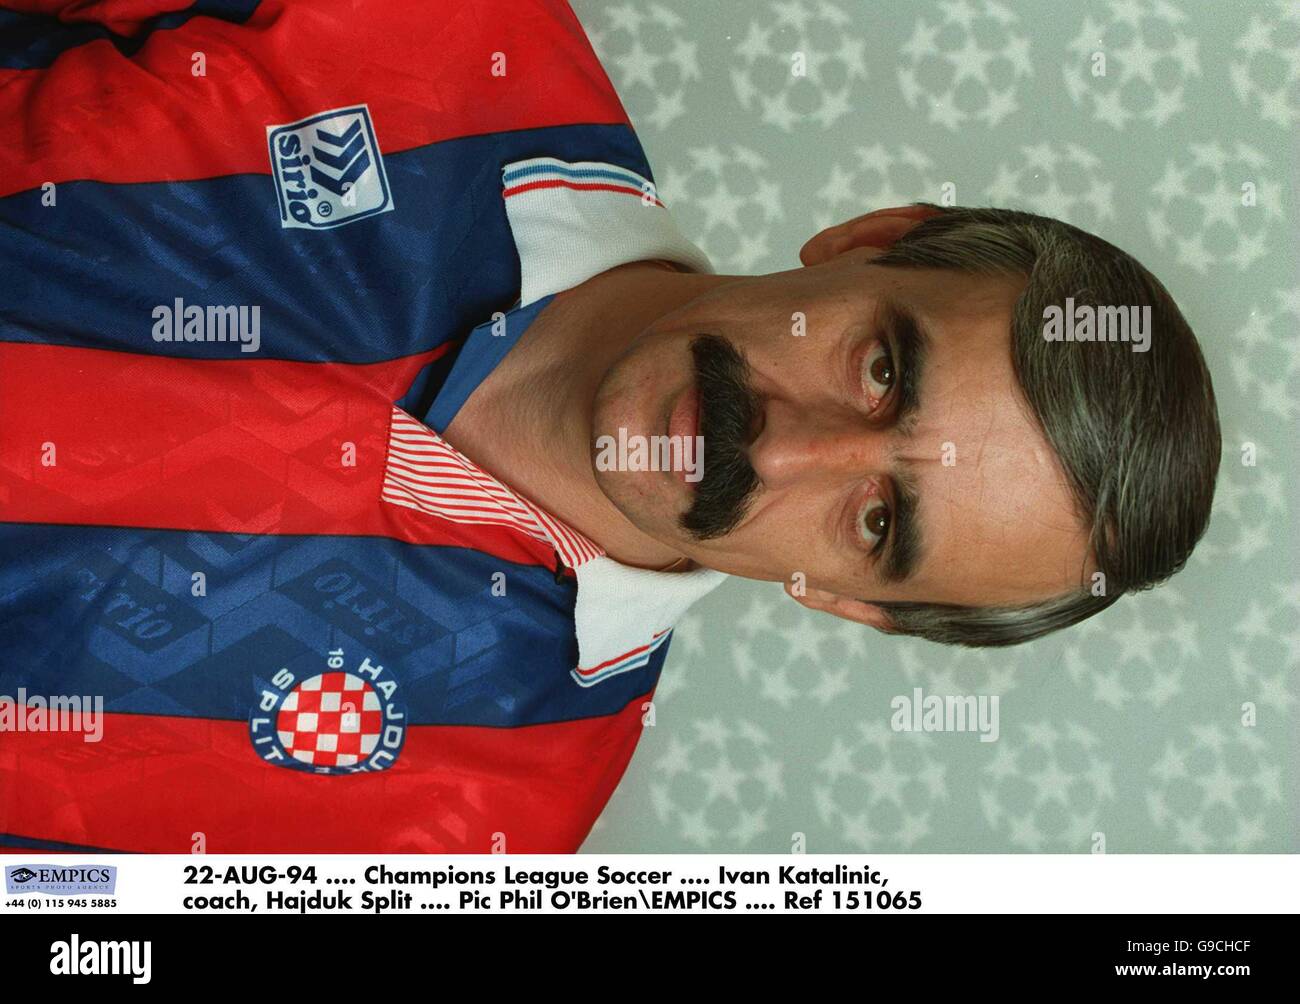 Soccer - UEFA Champions League - Hajduk Split Photocall. Ivan